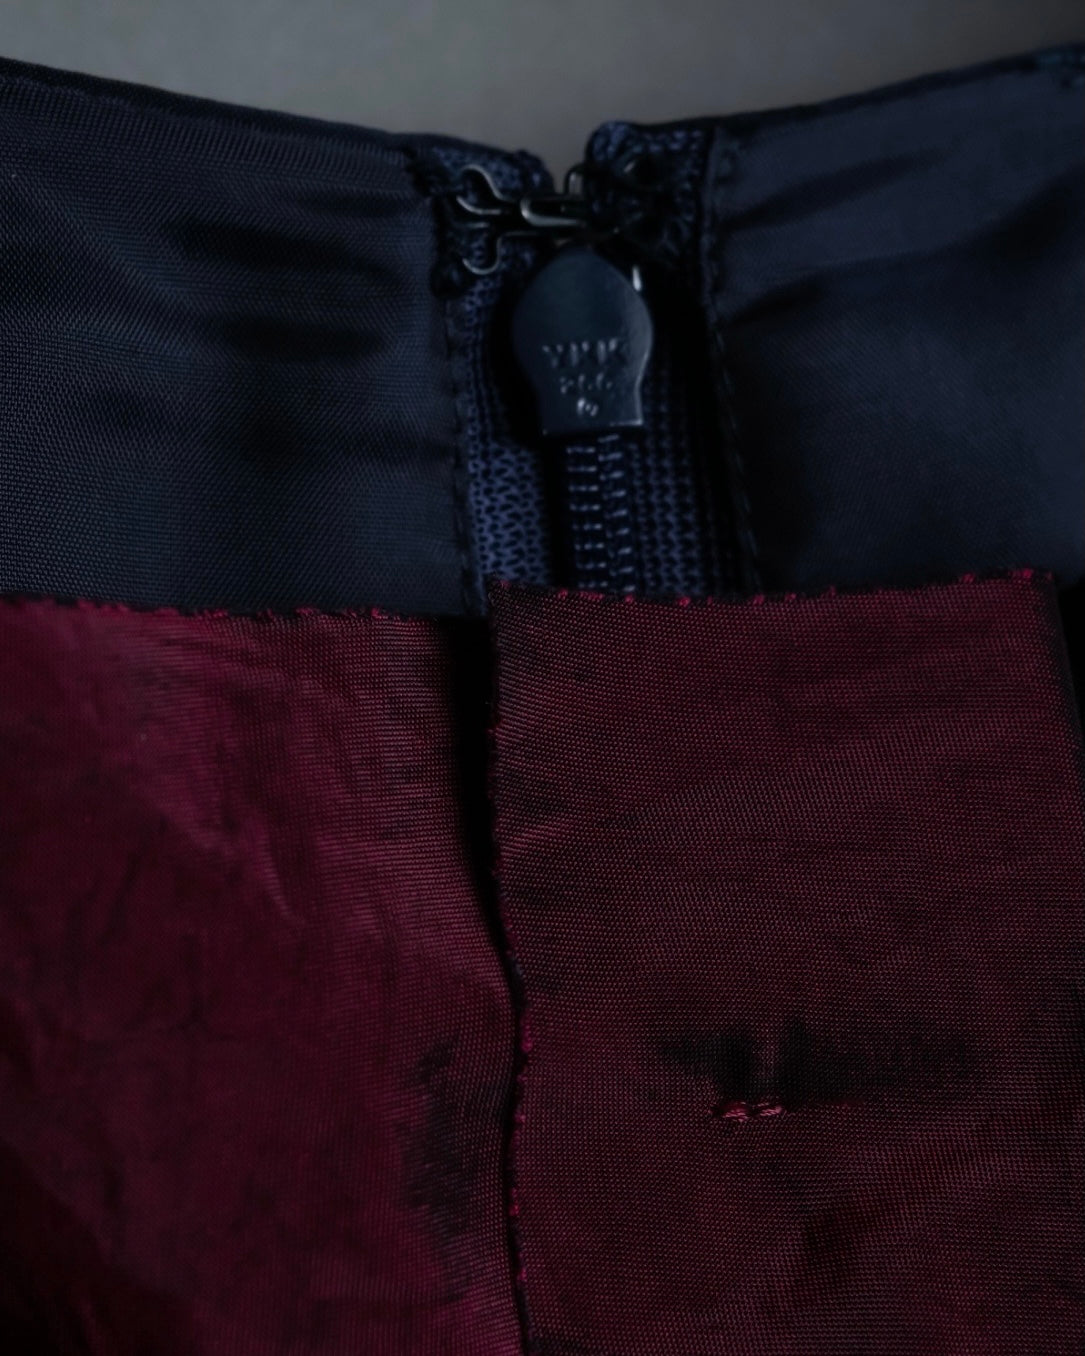 "LANVIN" black red pleated dress